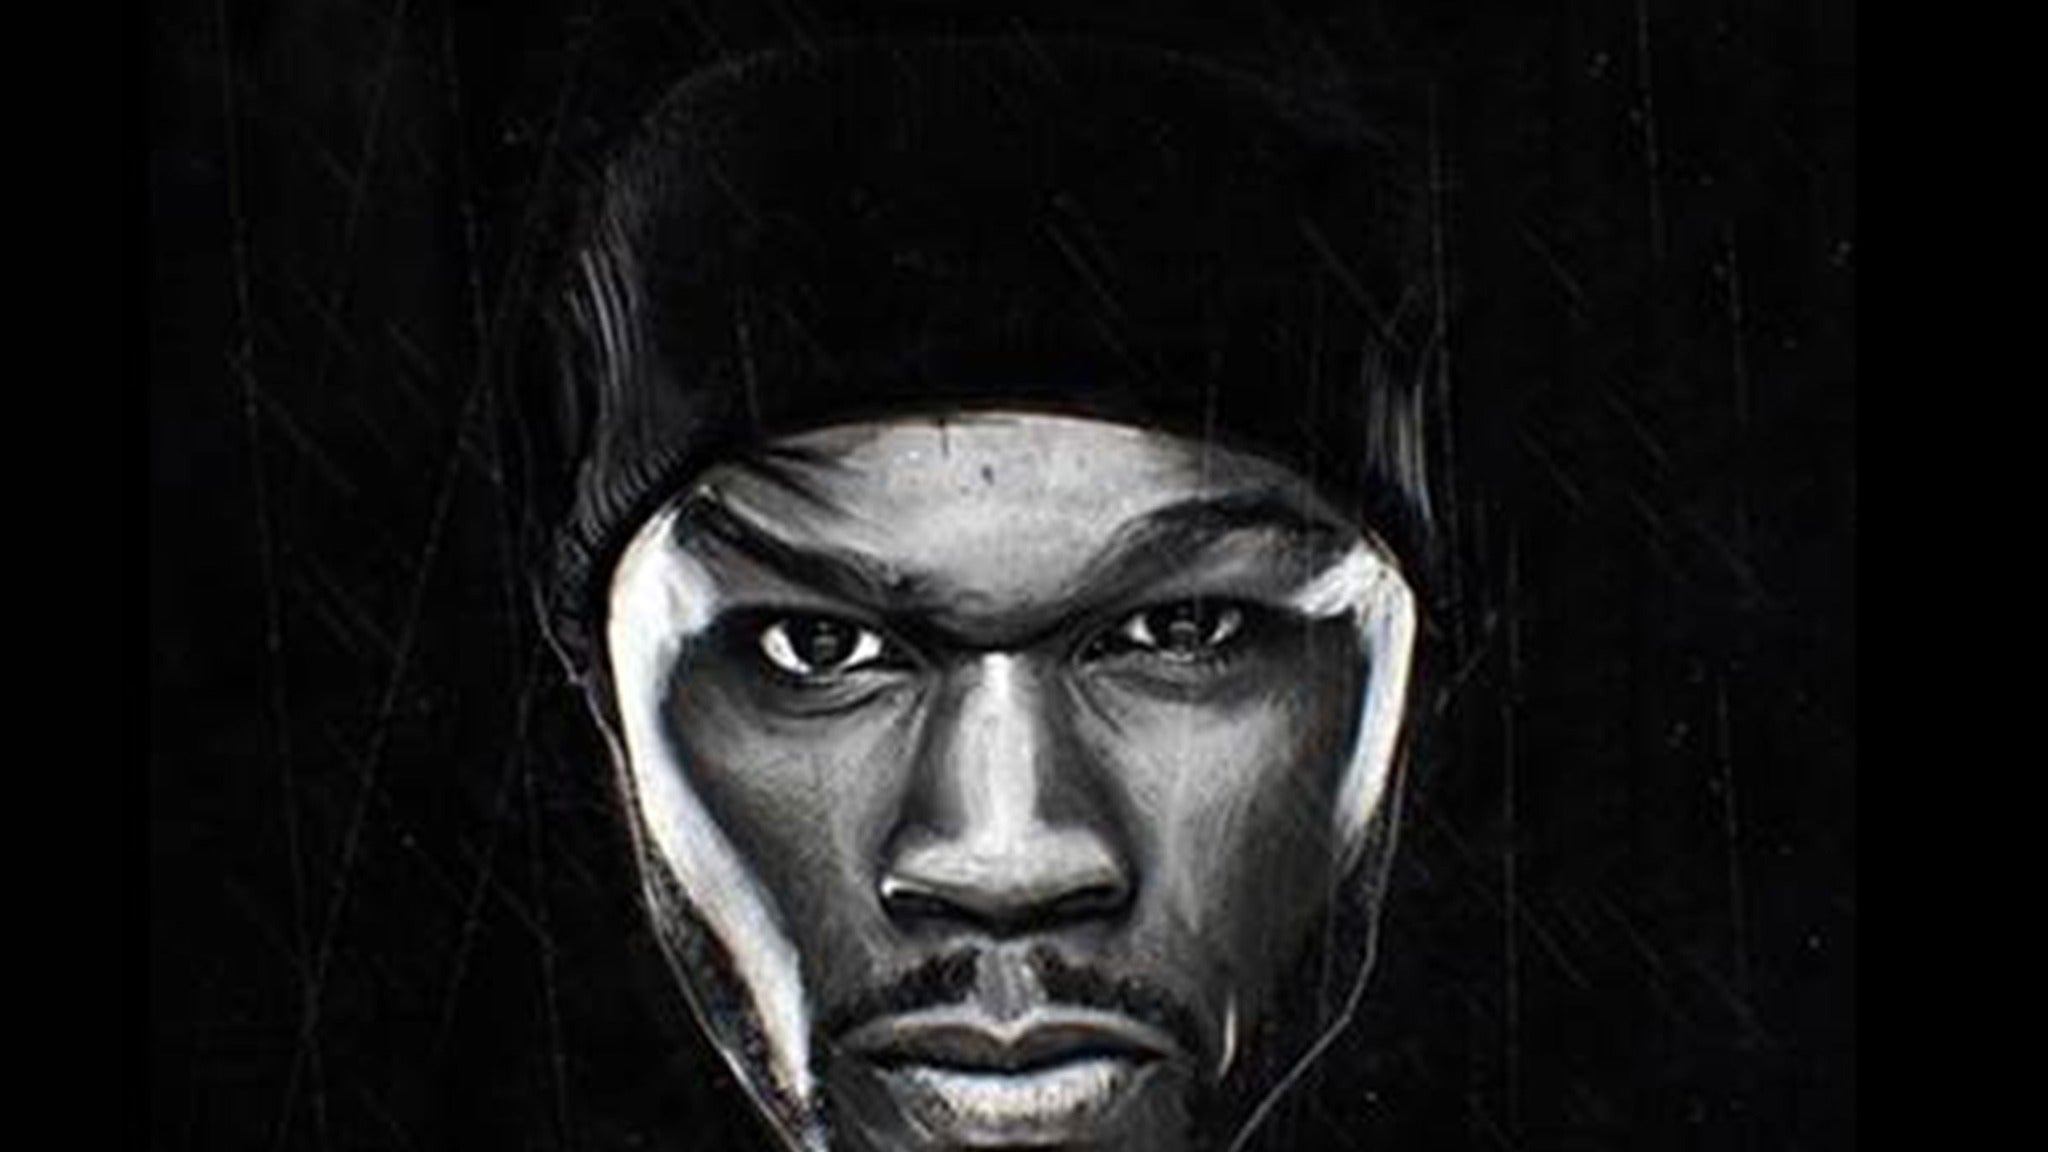 50 Cent tickets